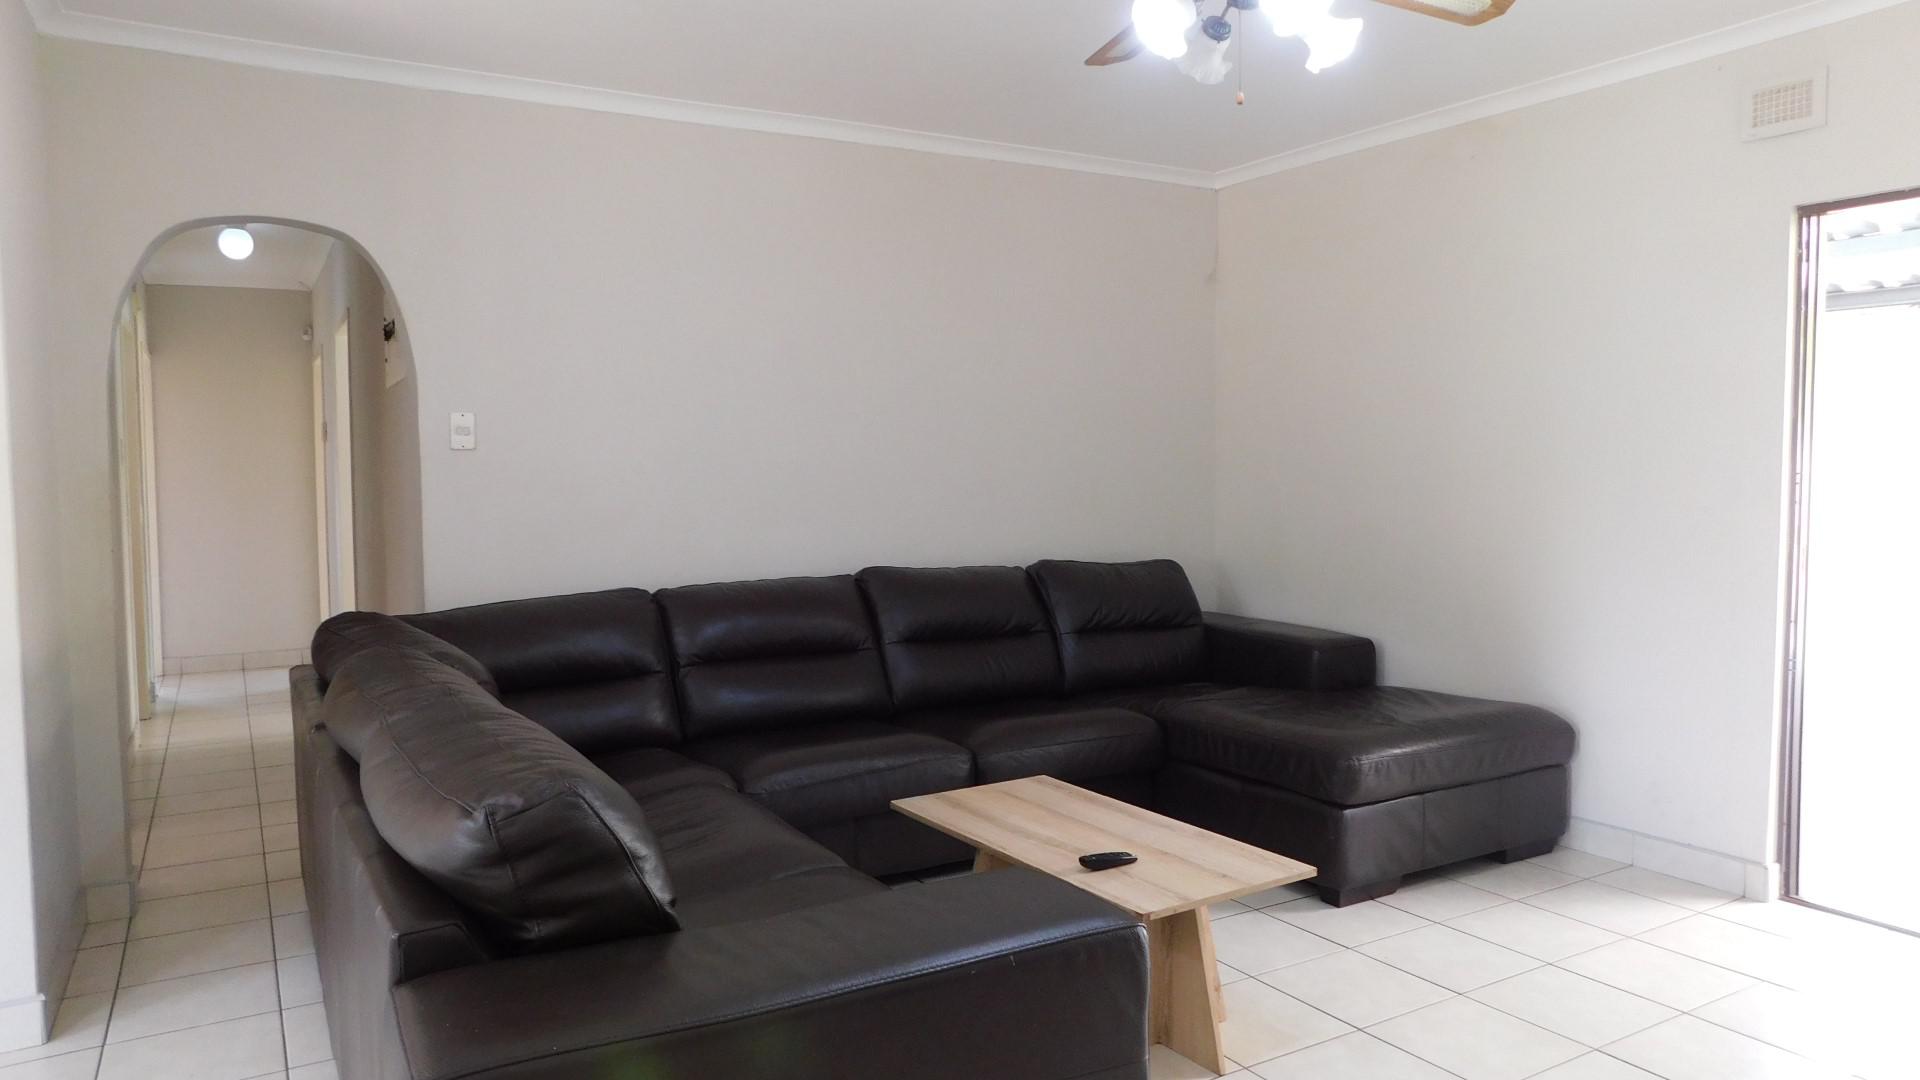 Lounges - 17 square meters of property in Pietermaritzburg (KZN)